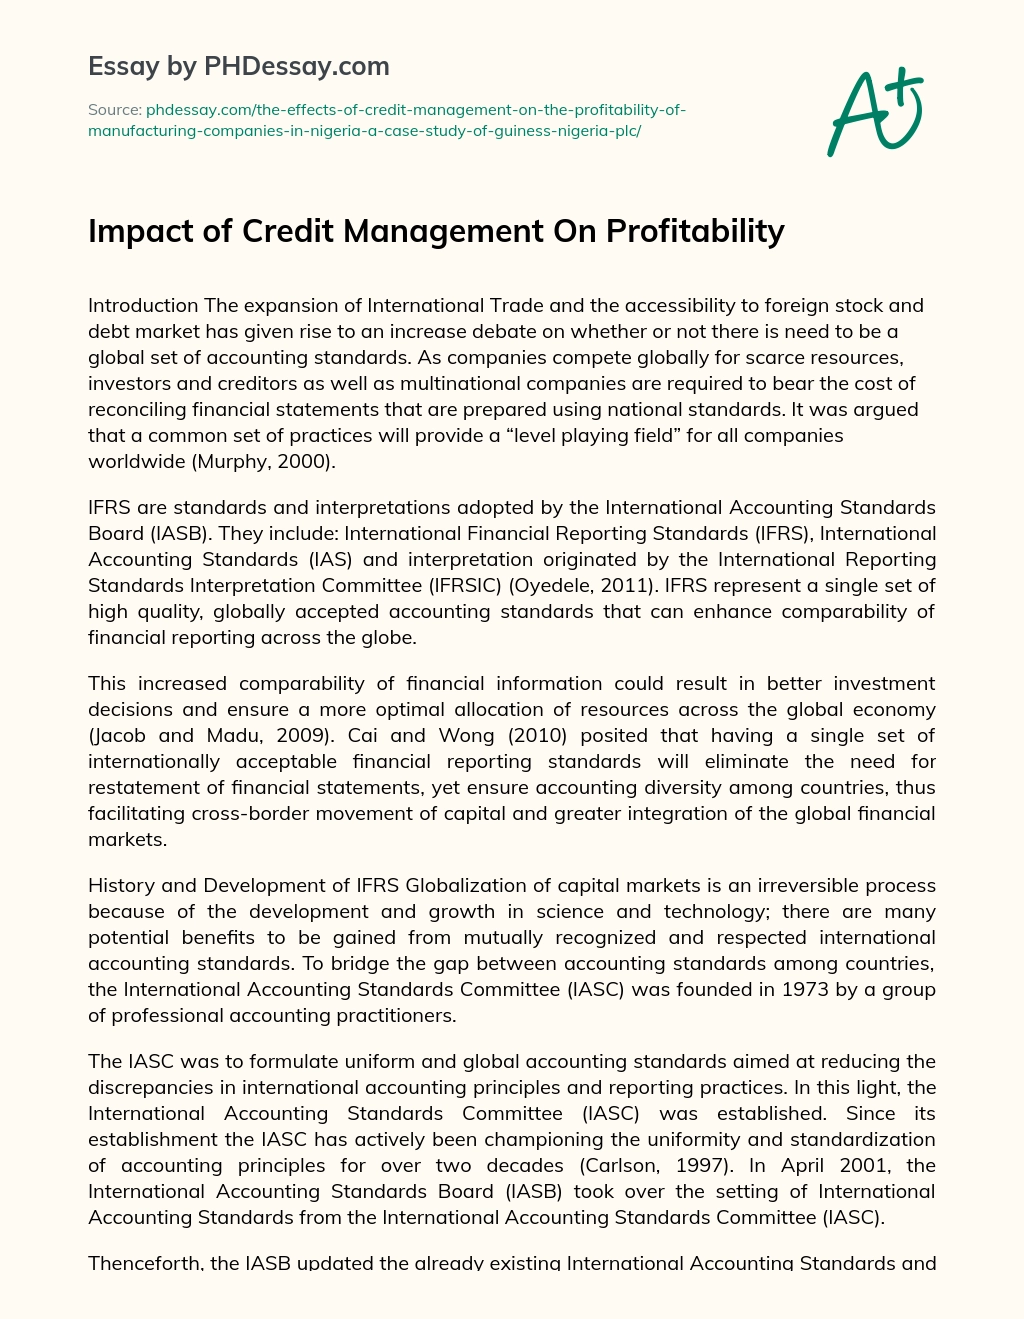 Impact of Credit Management On Profitability essay